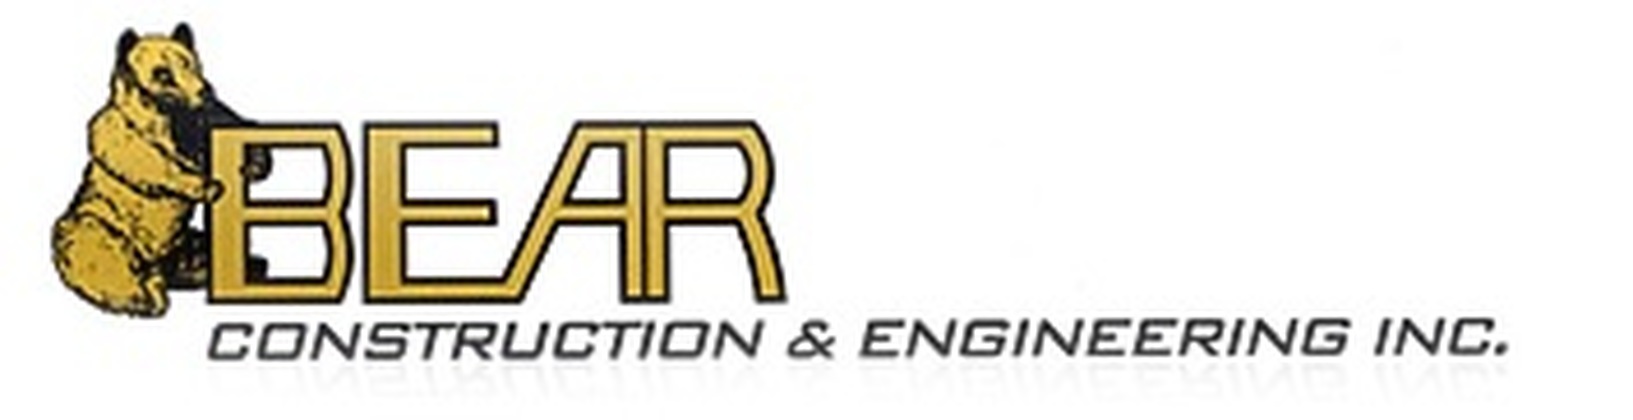 Bear Construction & Engineering Inc.